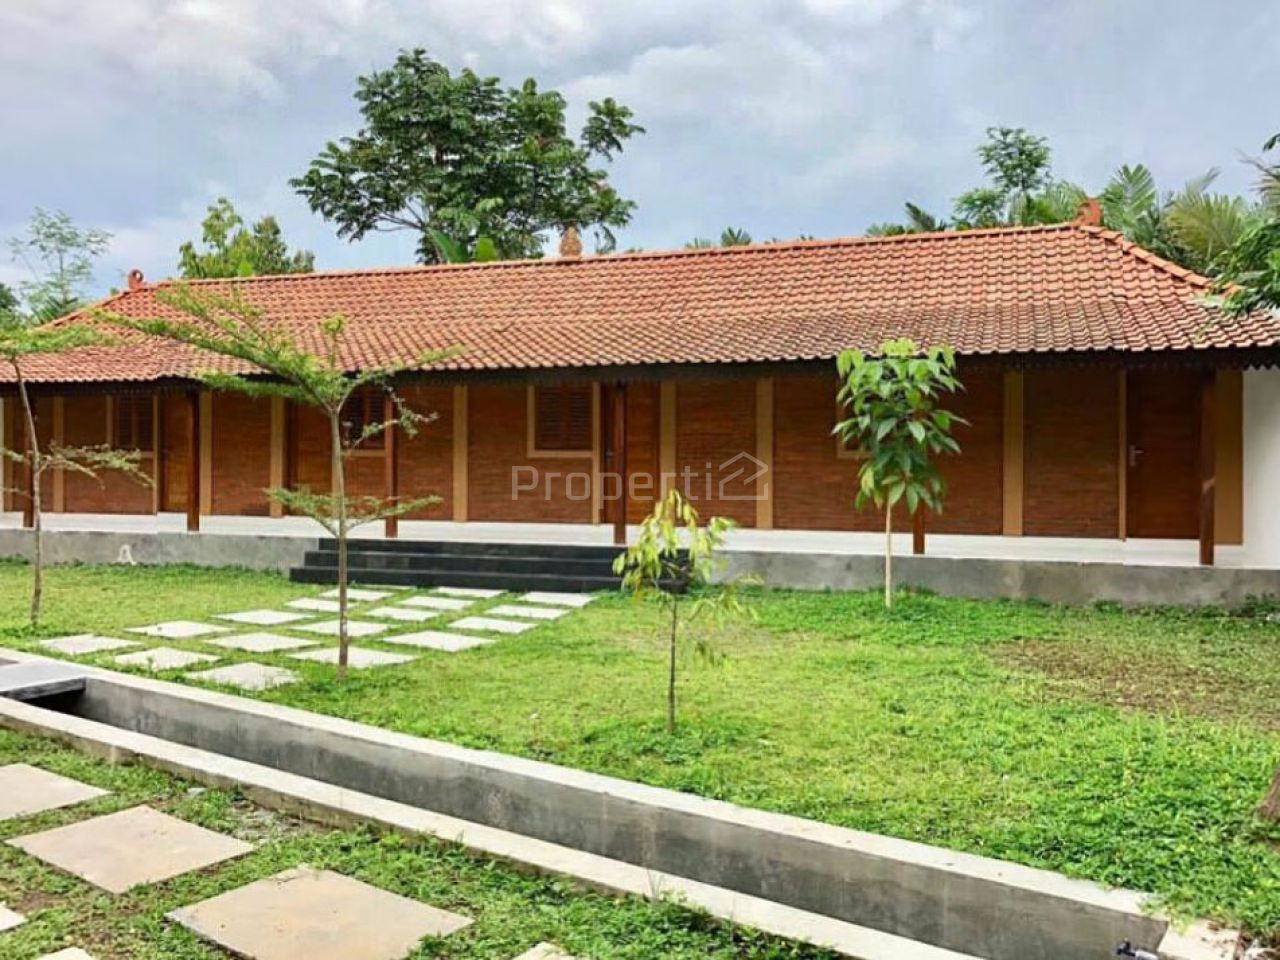 Joglo House at Jl. Turi, Sleman, Di Yogyakarta